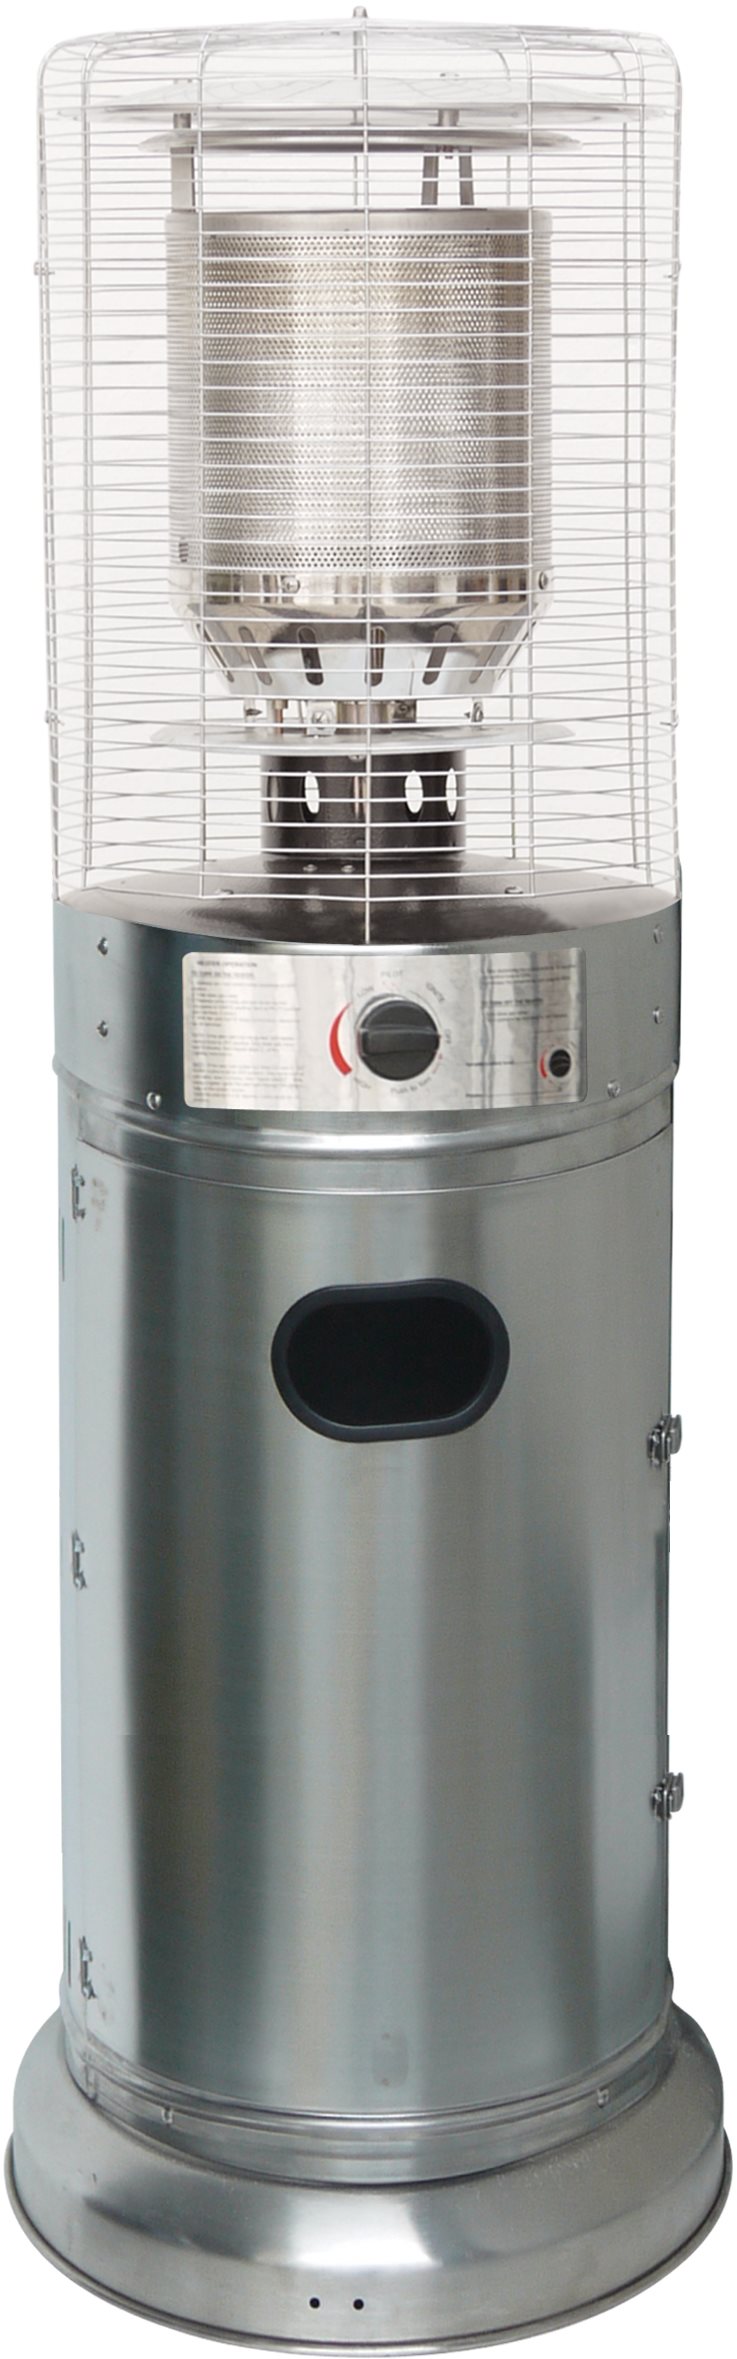 La Proromance Heater SPH-11-S